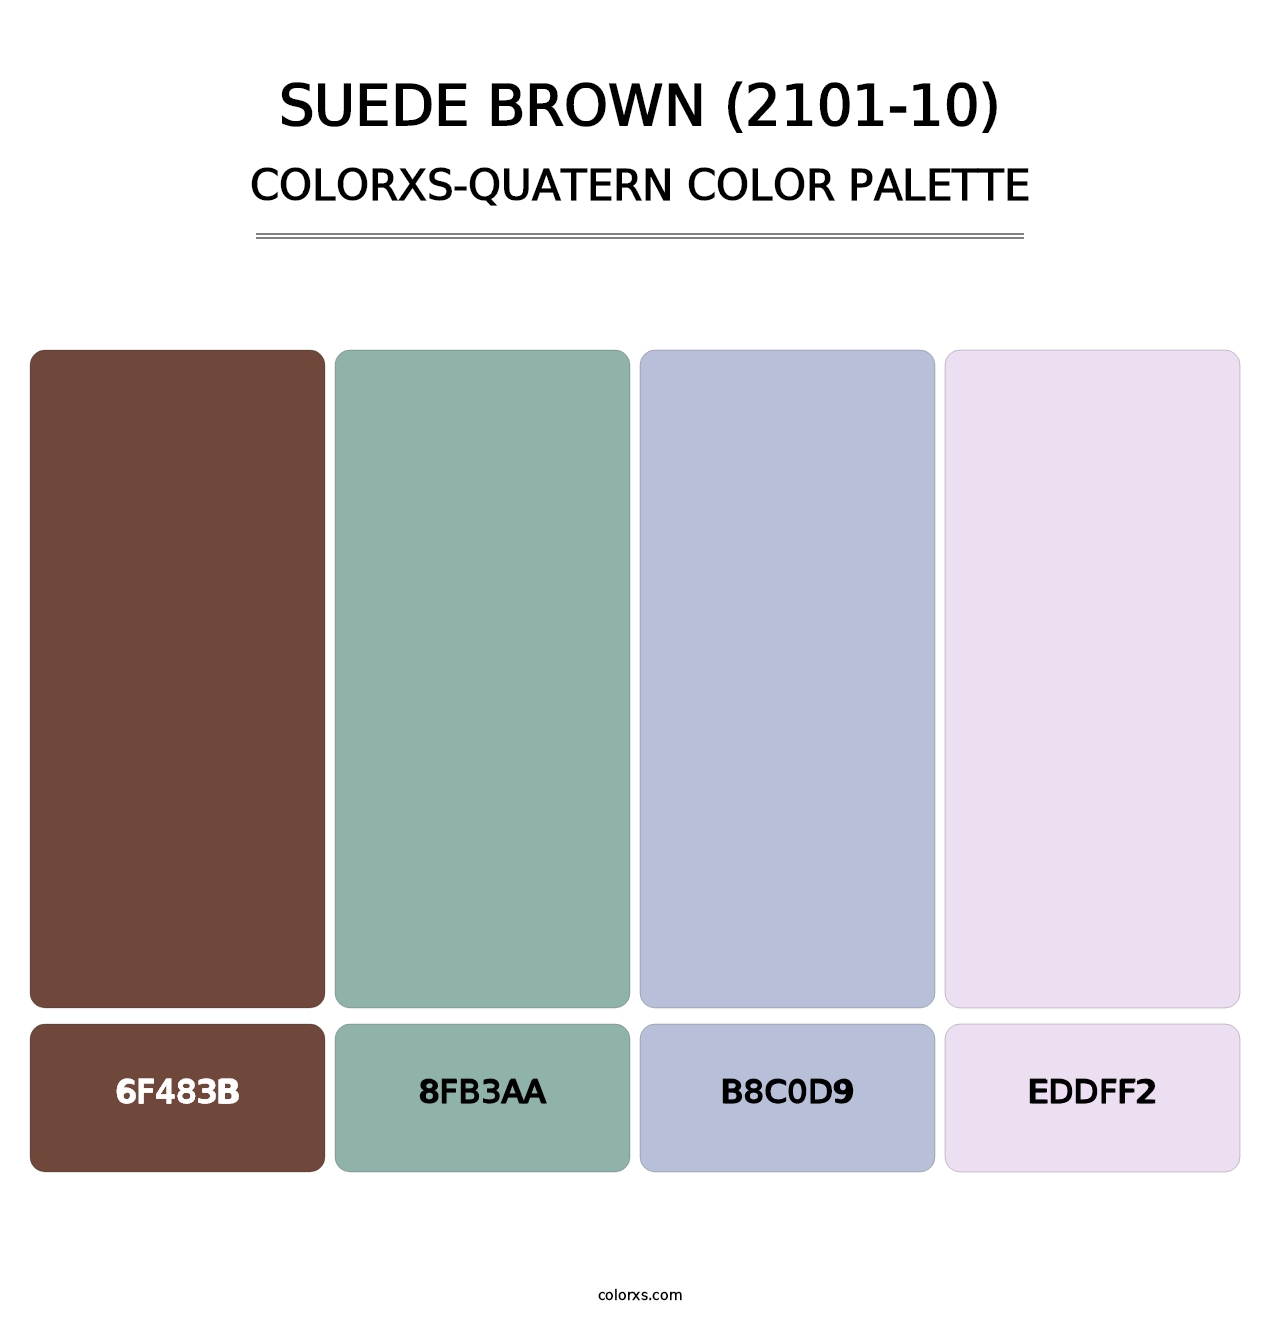 Suede Brown (2101-10) - Colorxs Quatern Palette